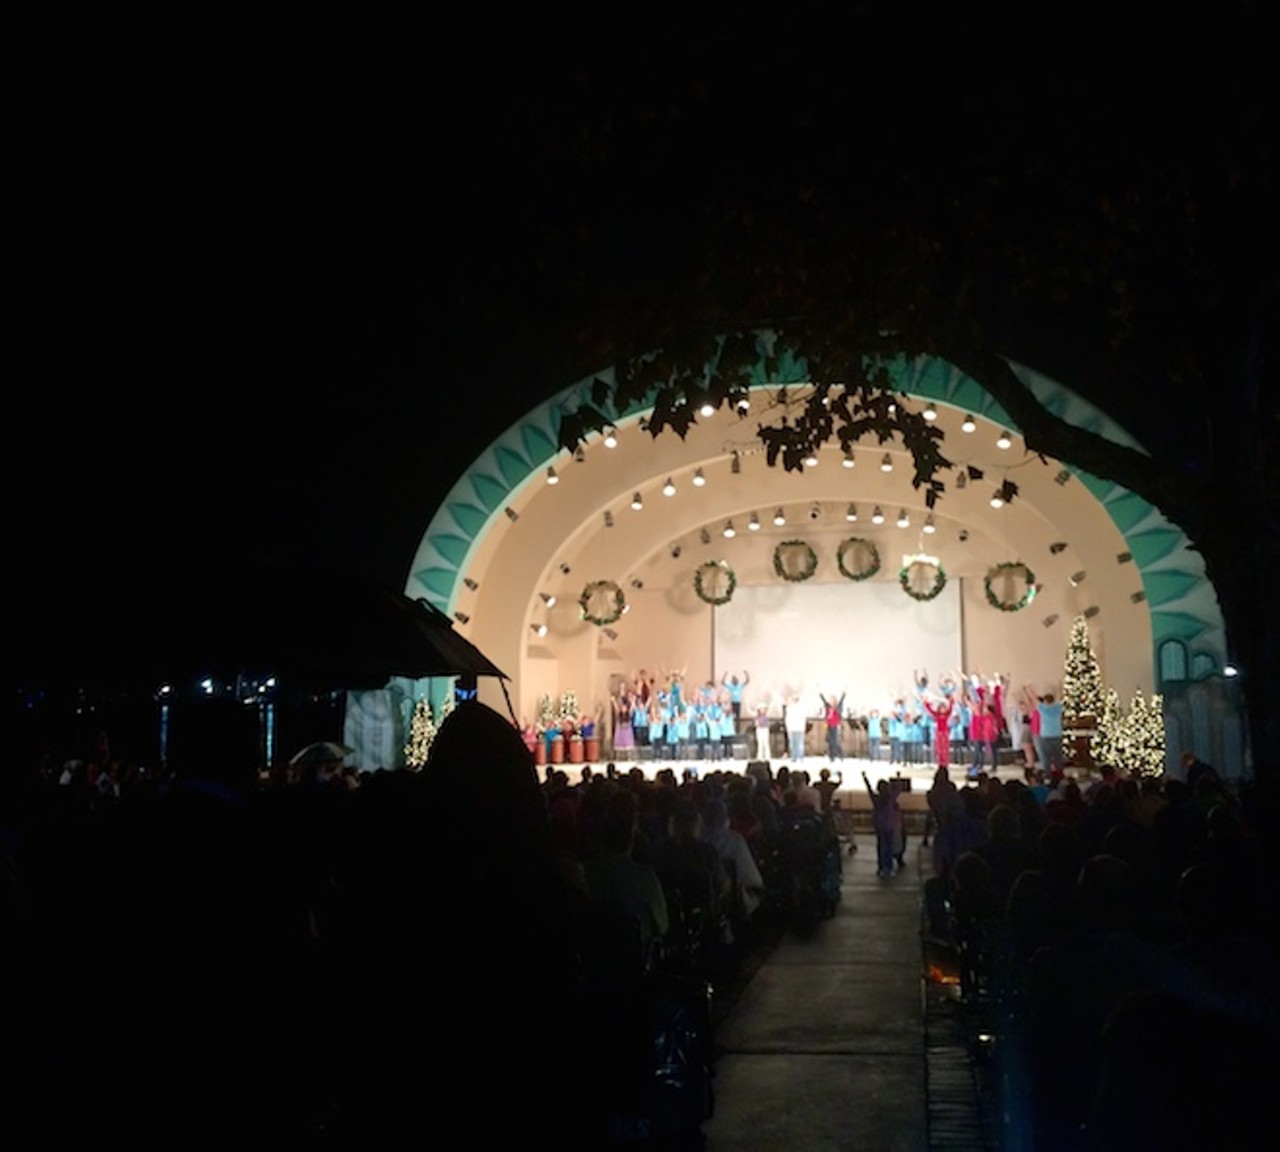 Orlando Christmas tree lighting show in Walt Disney amphitheater at Lake Eola